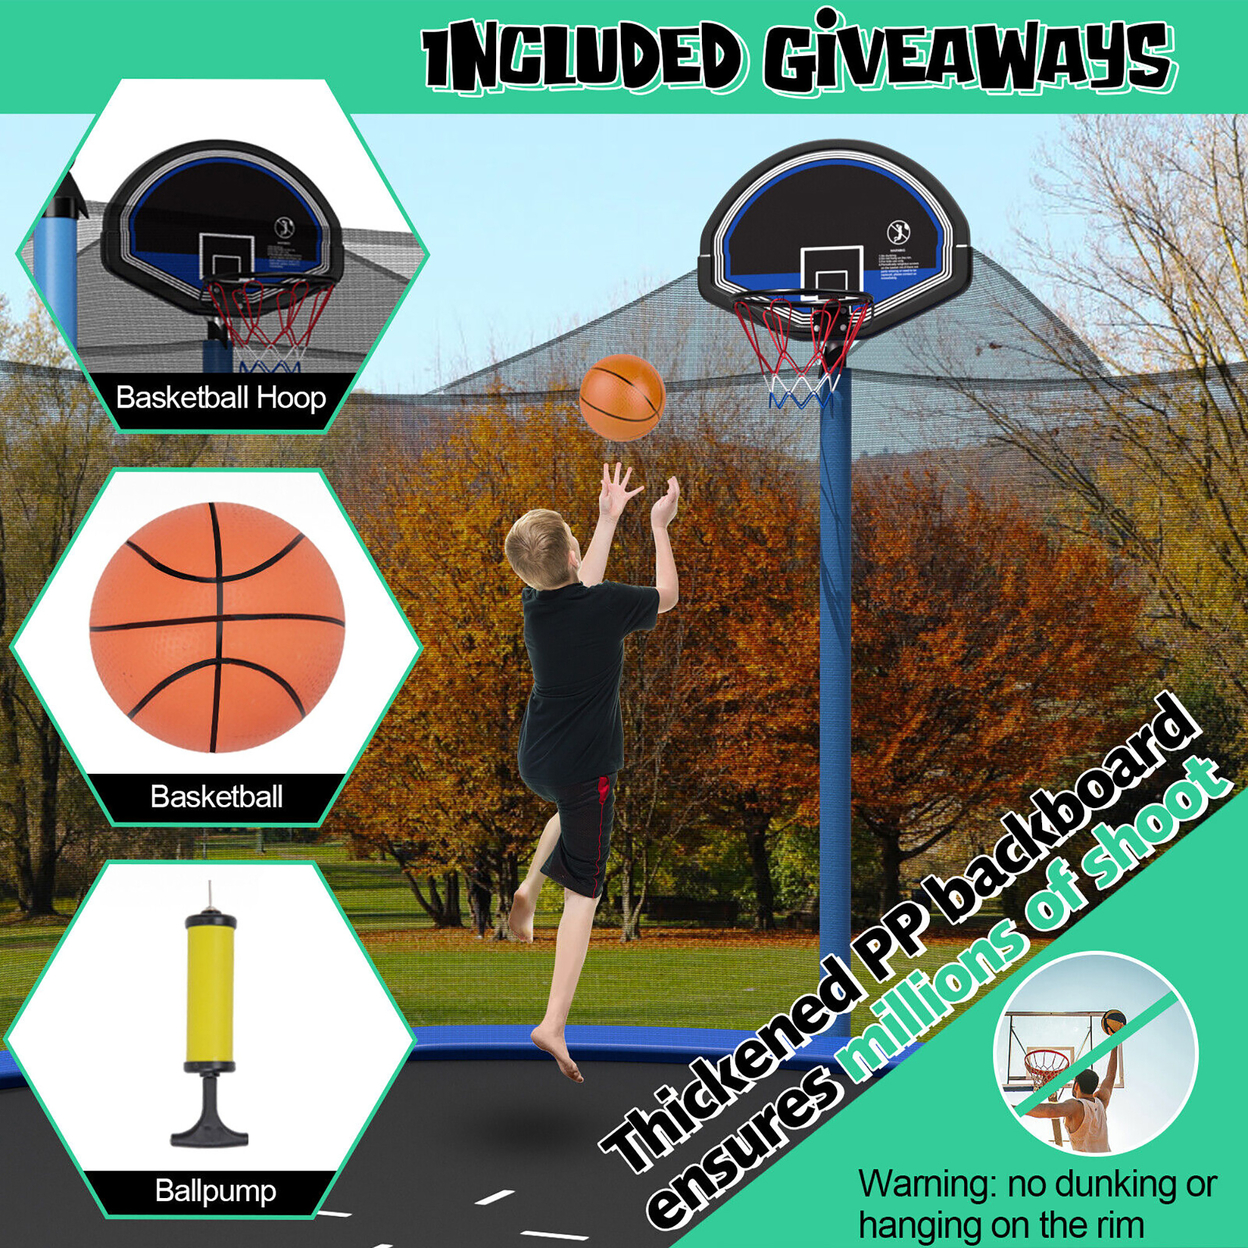 12/14/15/16FT Recreational Trampoline W/ Inner Enclosure Net Basketball Hoop Ladder ASTM - 12ft